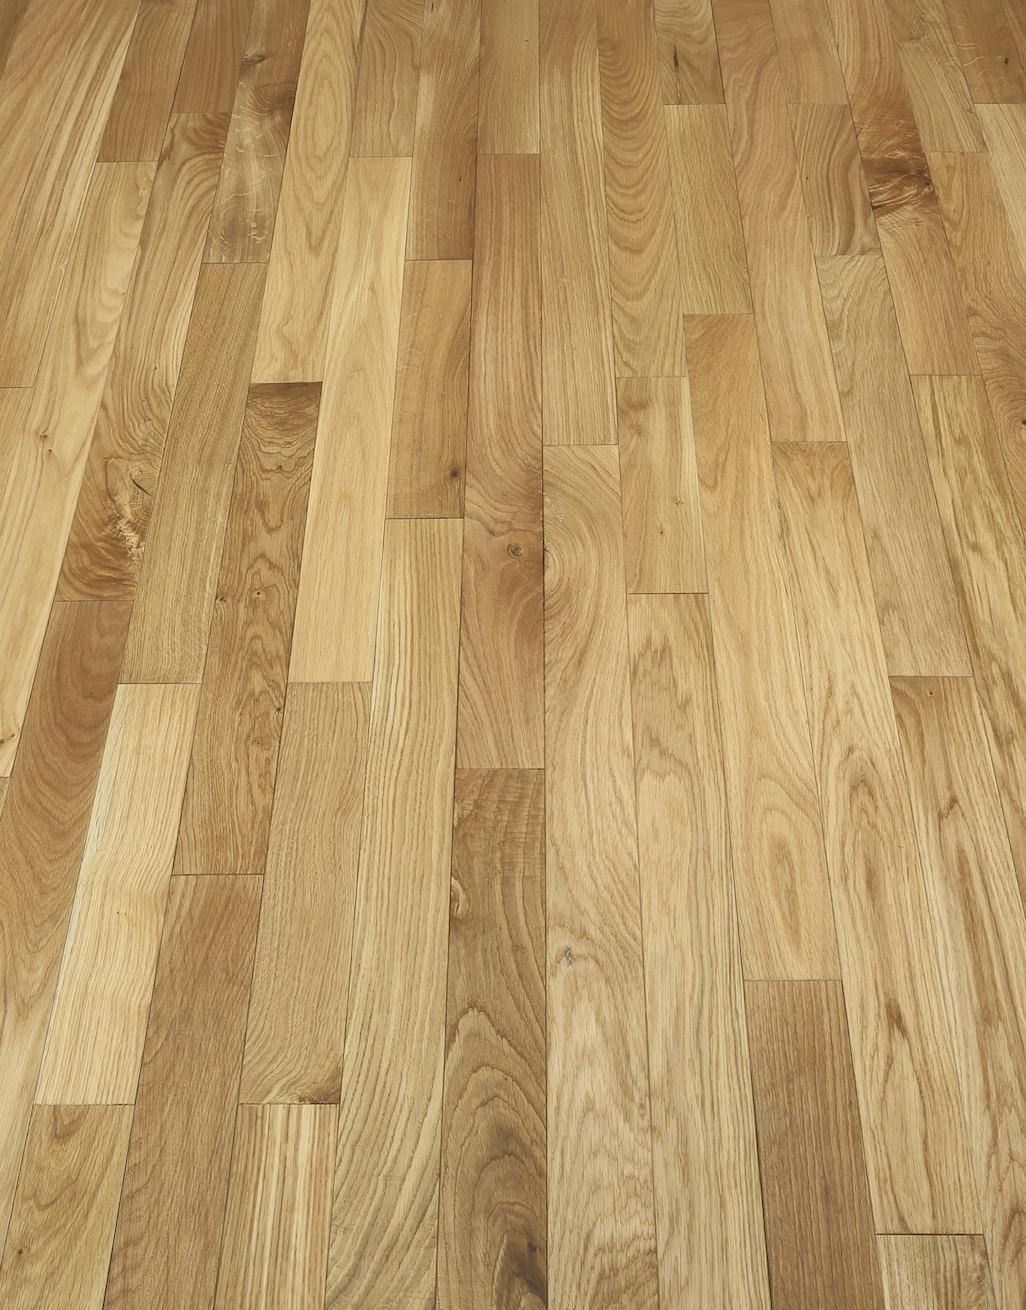 Classic Oak Natural Brushed Oiled Solid Wood Flooring Direct Wood Flooring